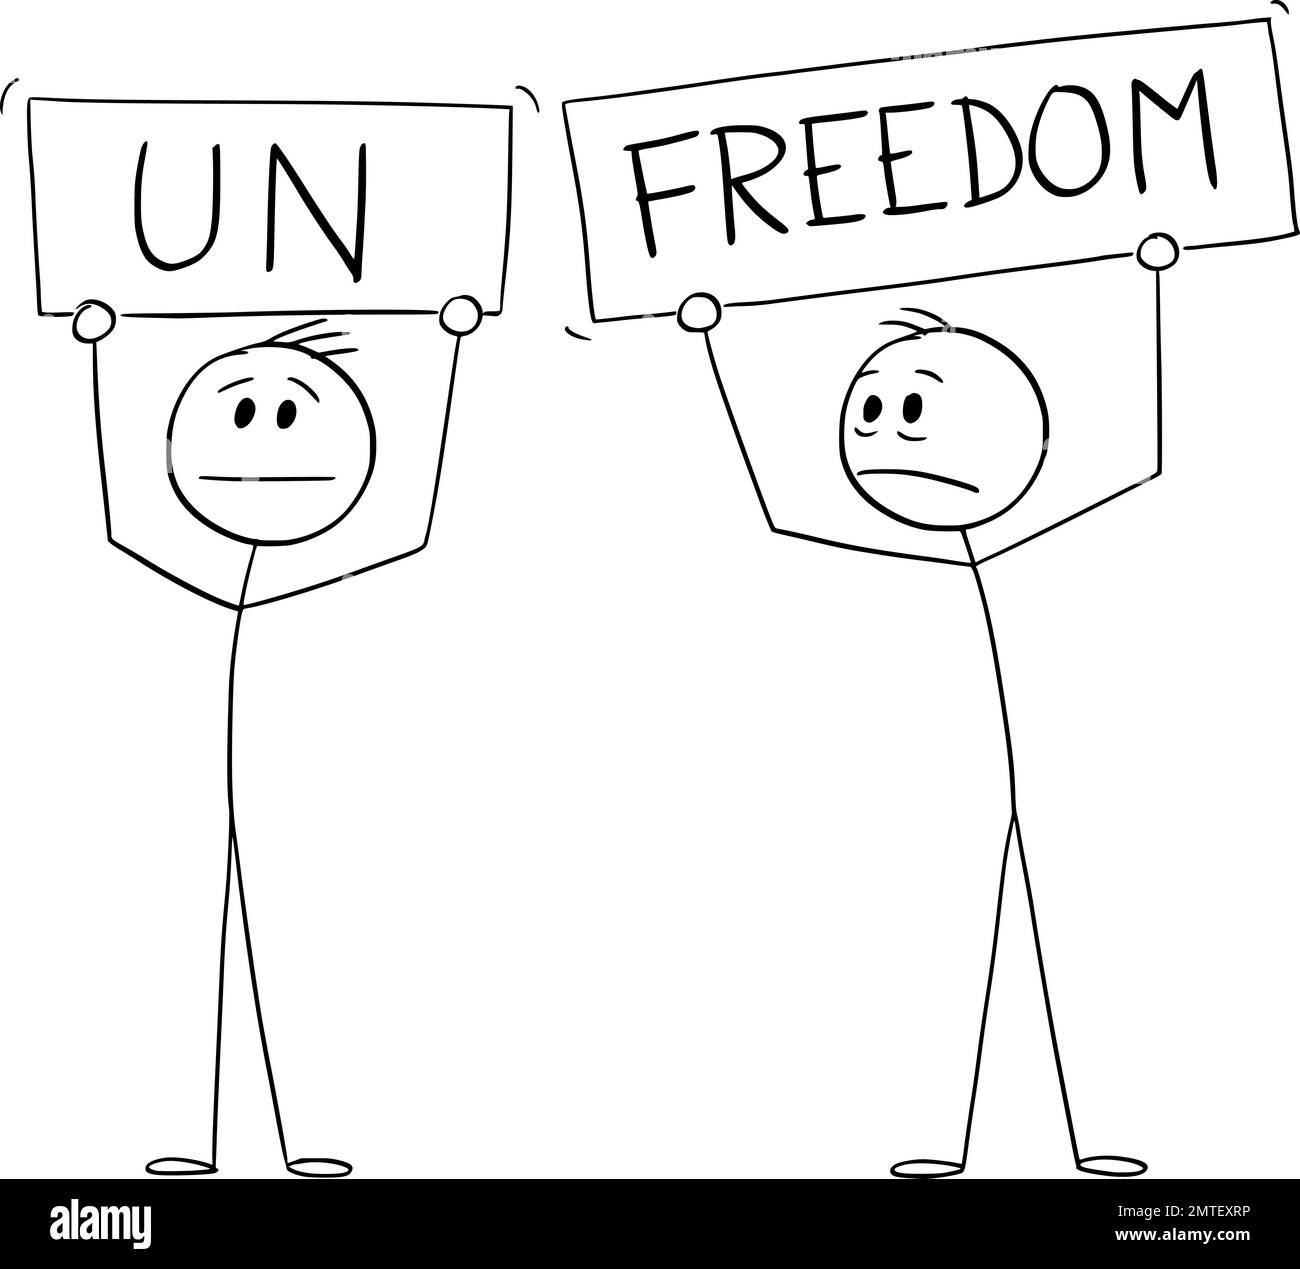 Freedom and Unfreedom , Vector Cartoon Stick Figure Illustration Stock Vector